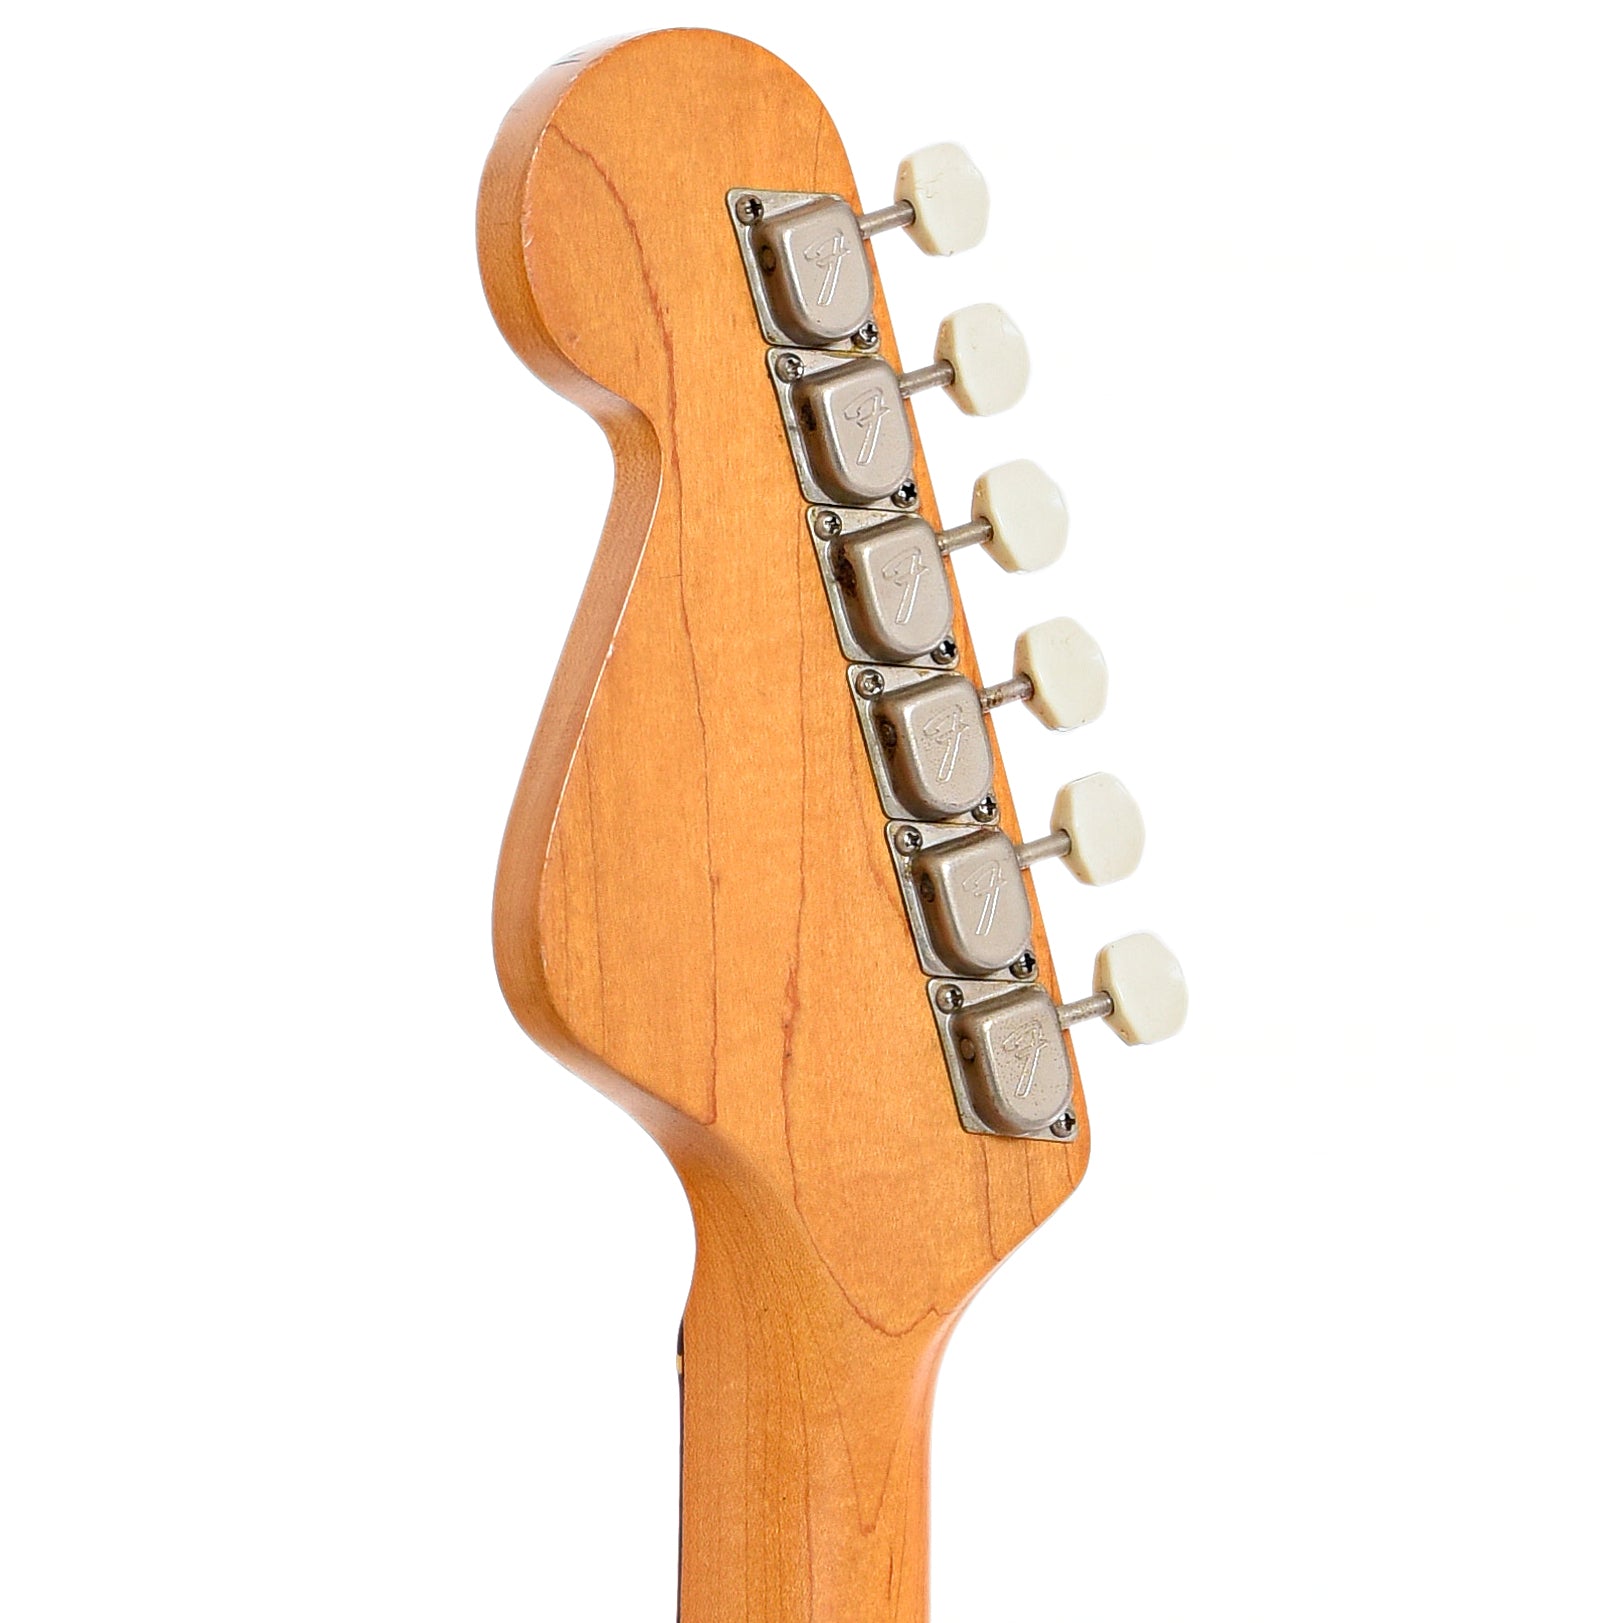 Back headstock of Fender Newporter Acoustic Guitar 